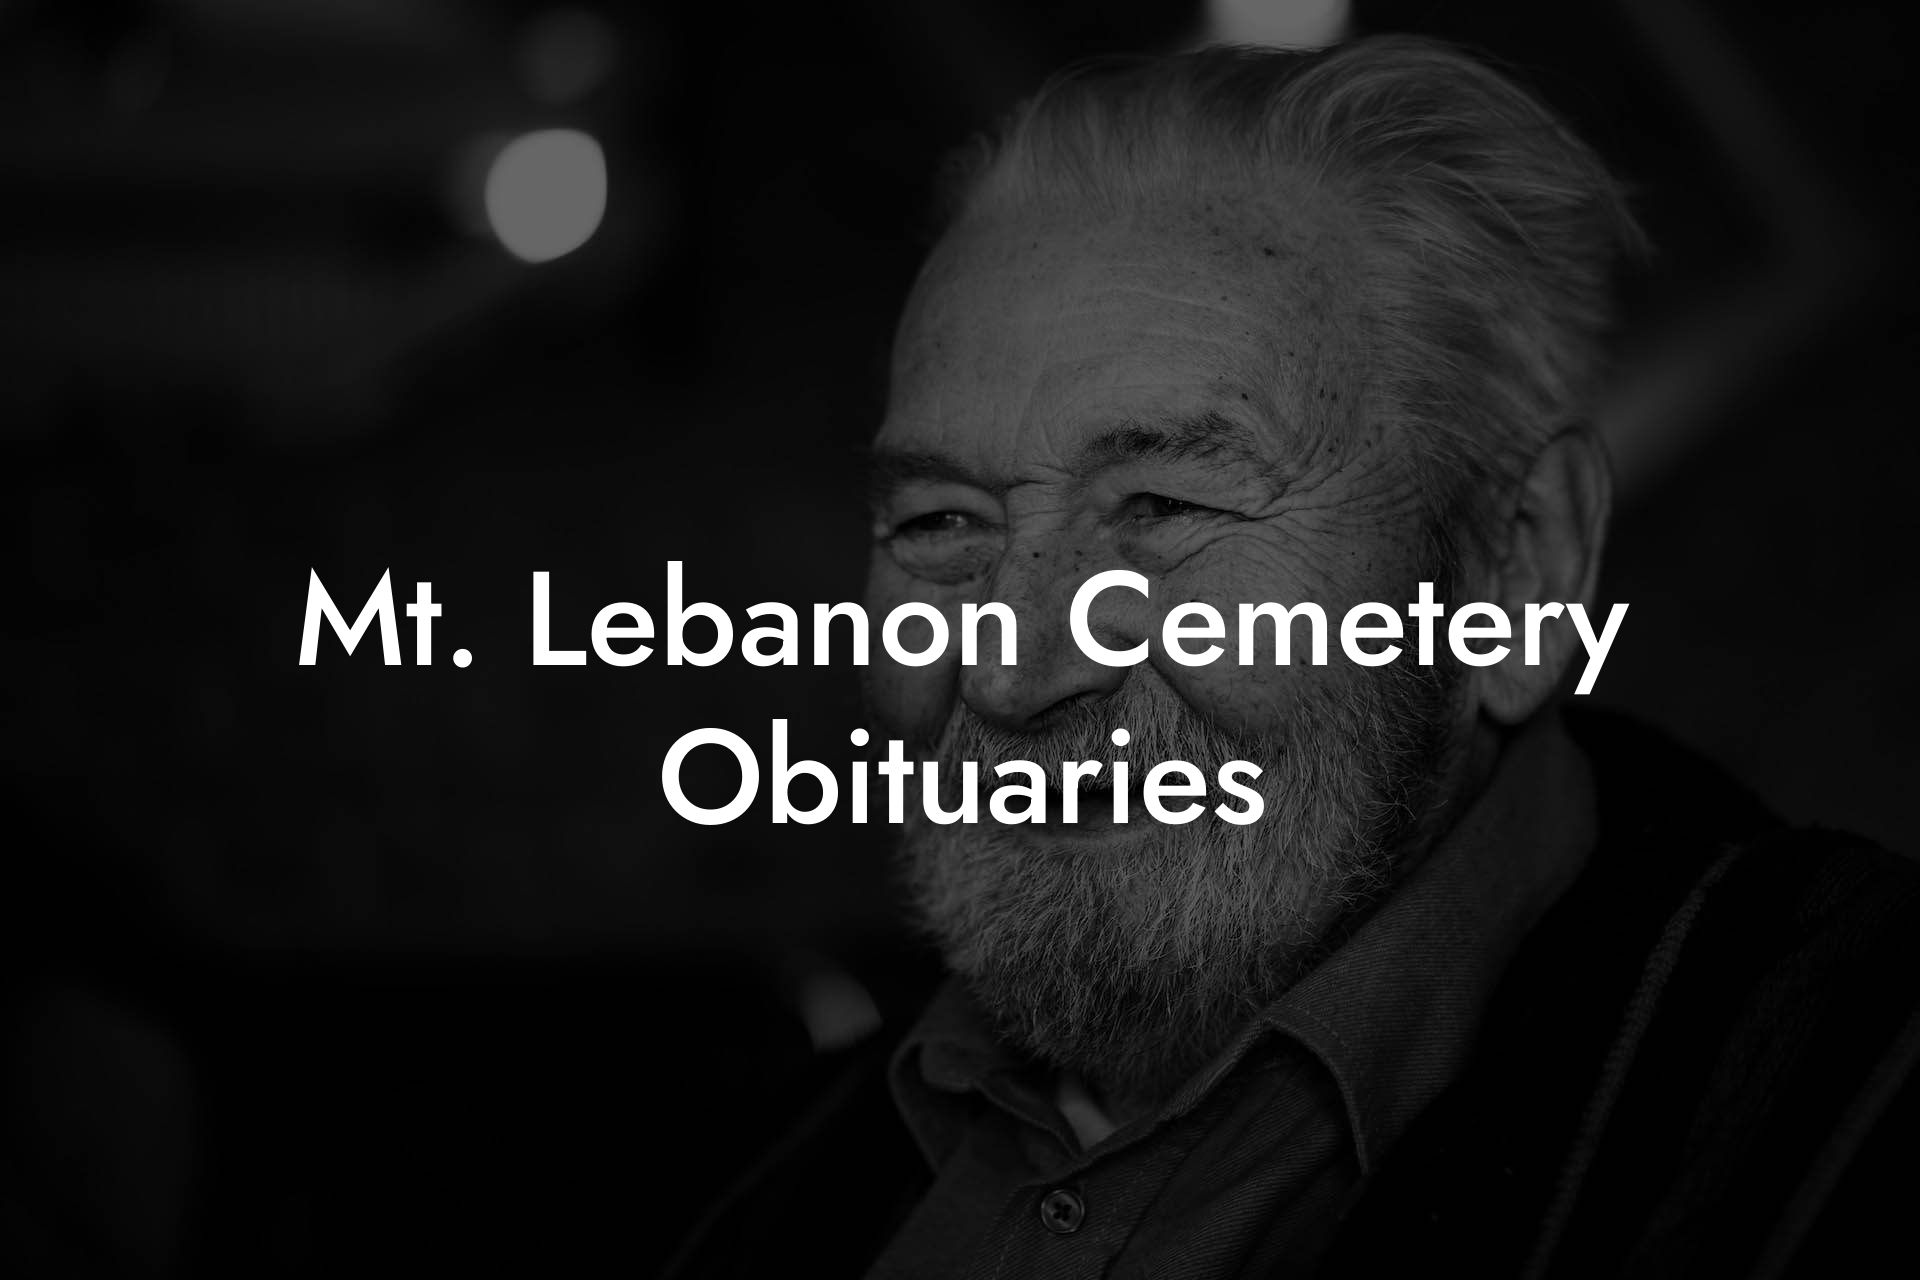 Mt. Lebanon Cemetery Obituaries